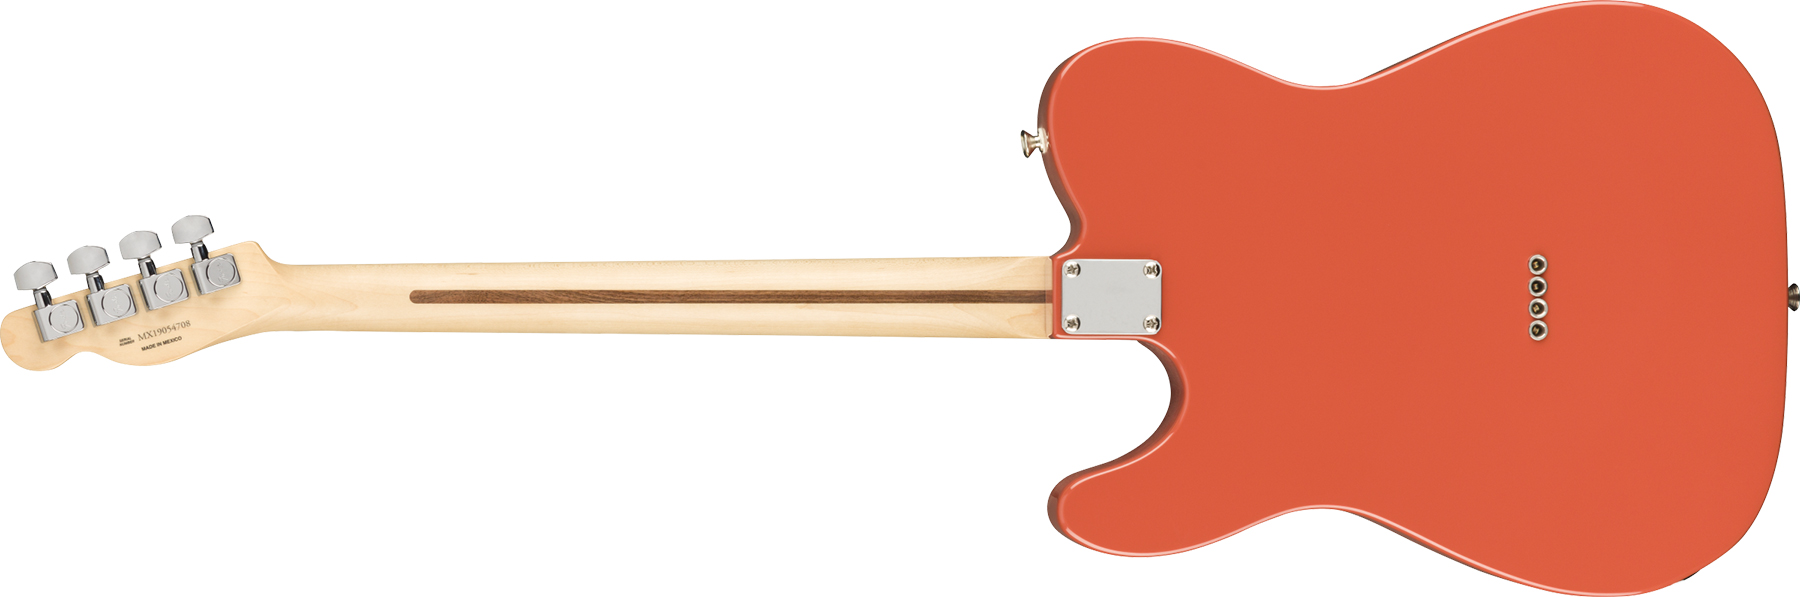 Fender Tenor Tele Alternate Reality Mex Mn - Fiesta Red - Televorm elektrische gitaar - Variation 1